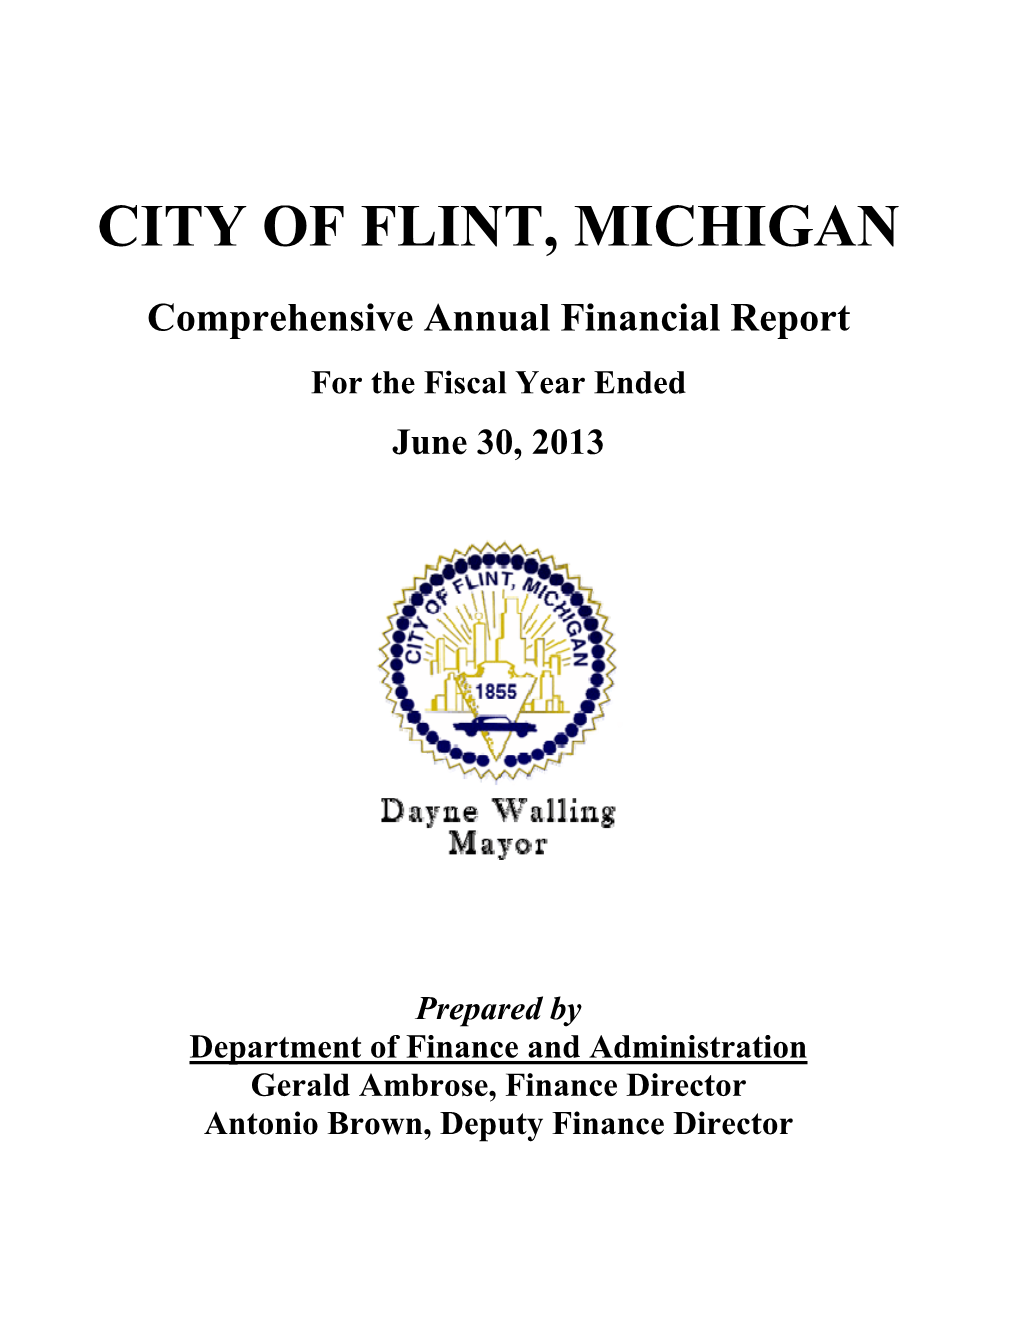 City of Flint, Michigan